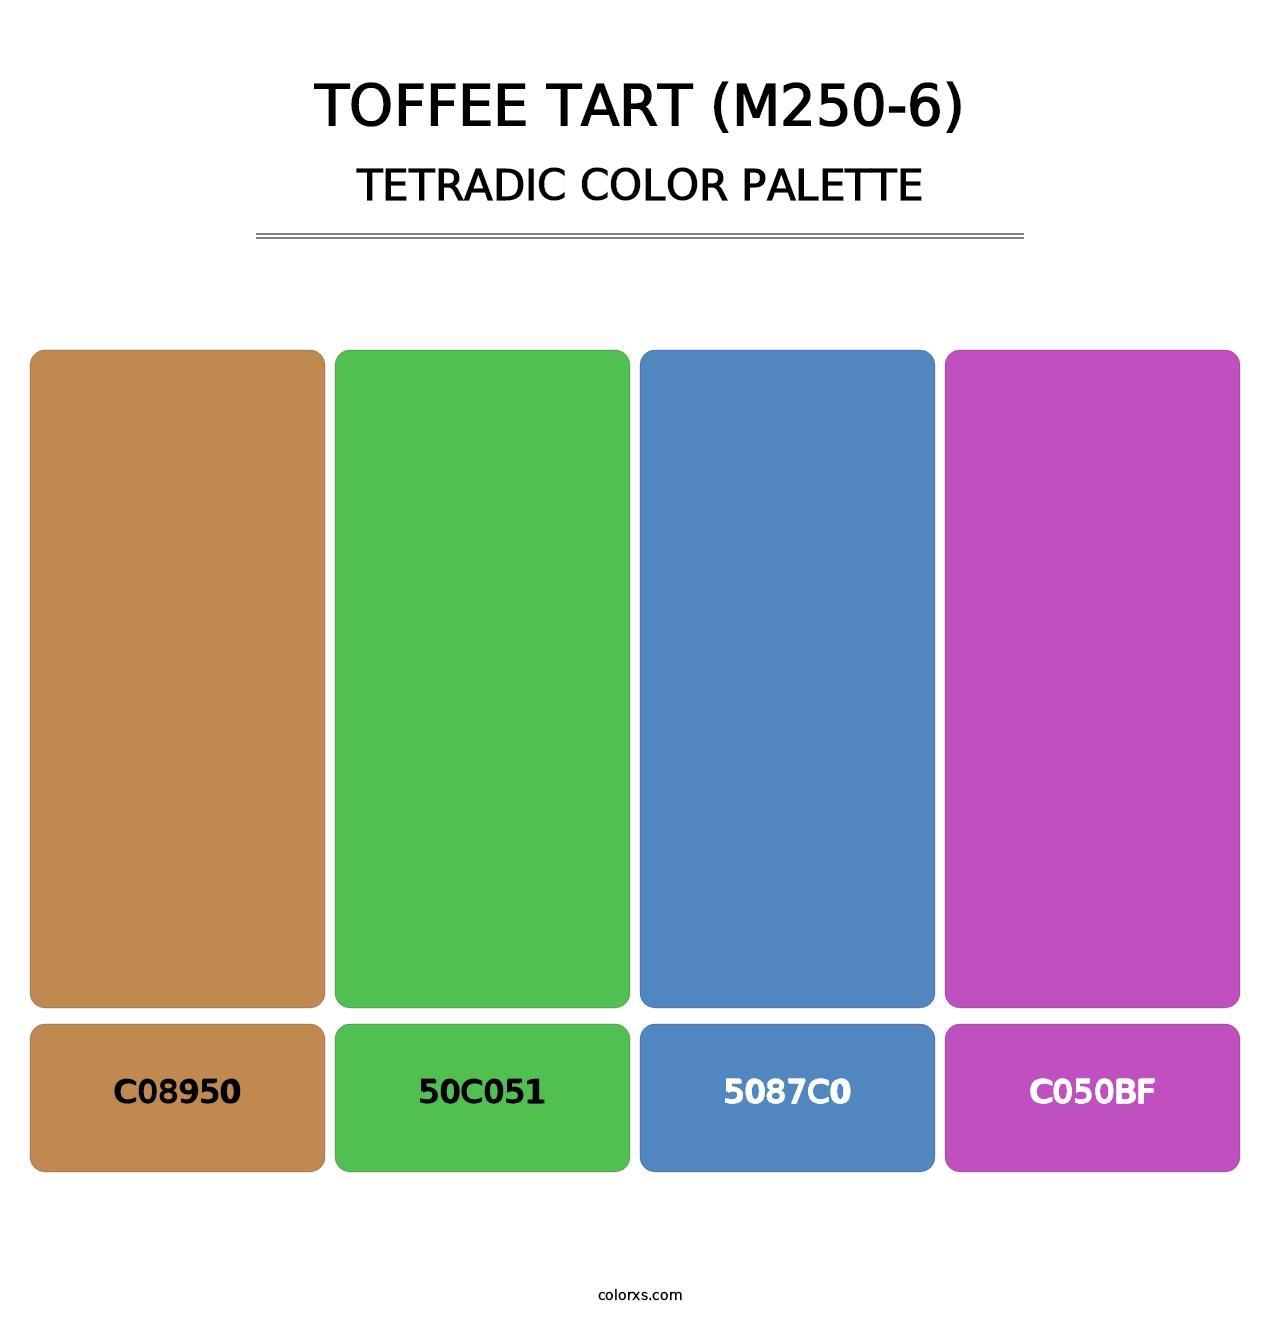 Toffee Tart (M250-6) - Tetradic Color Palette